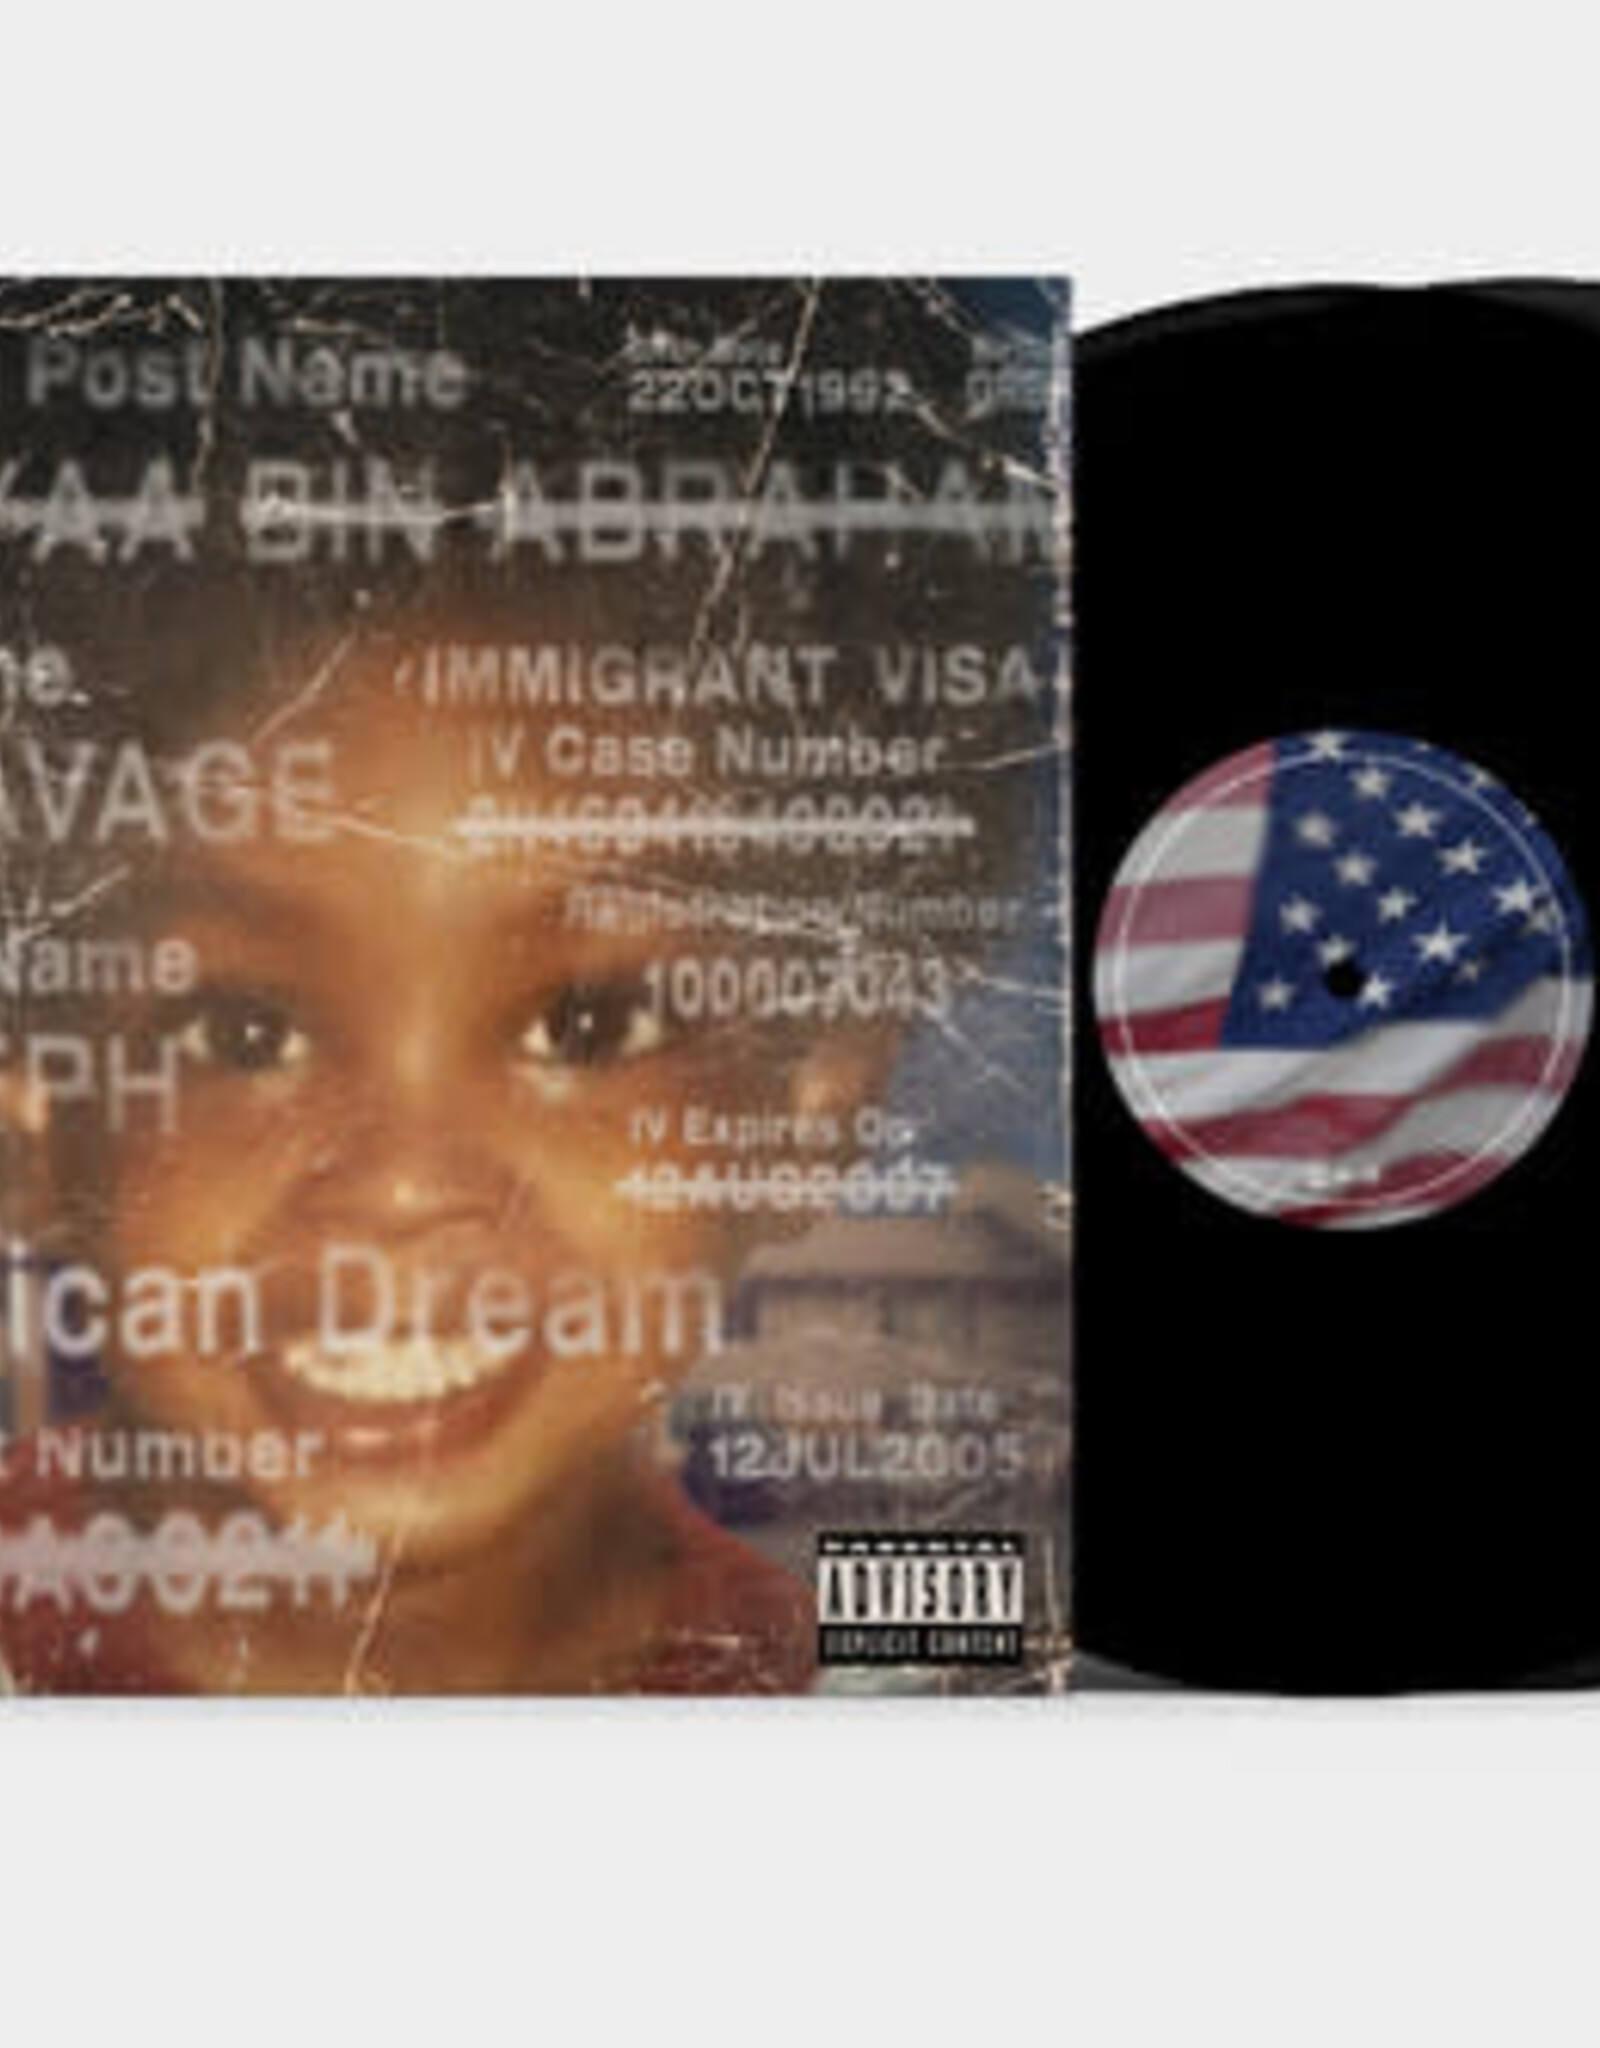 21 Savage  - American Dream